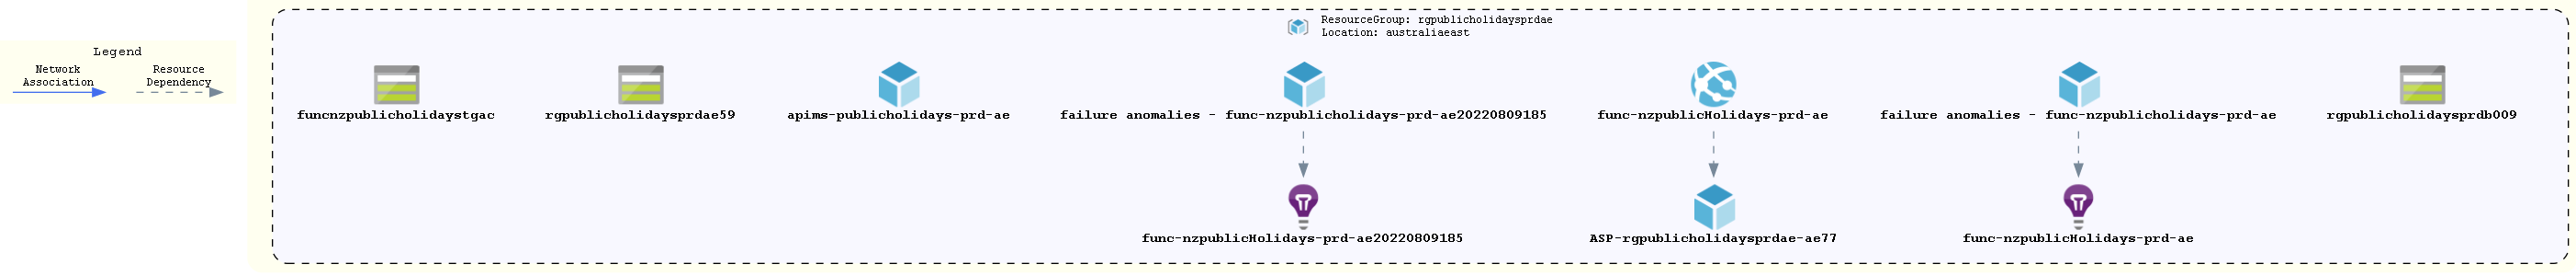 Azure Resource Group - Diagram